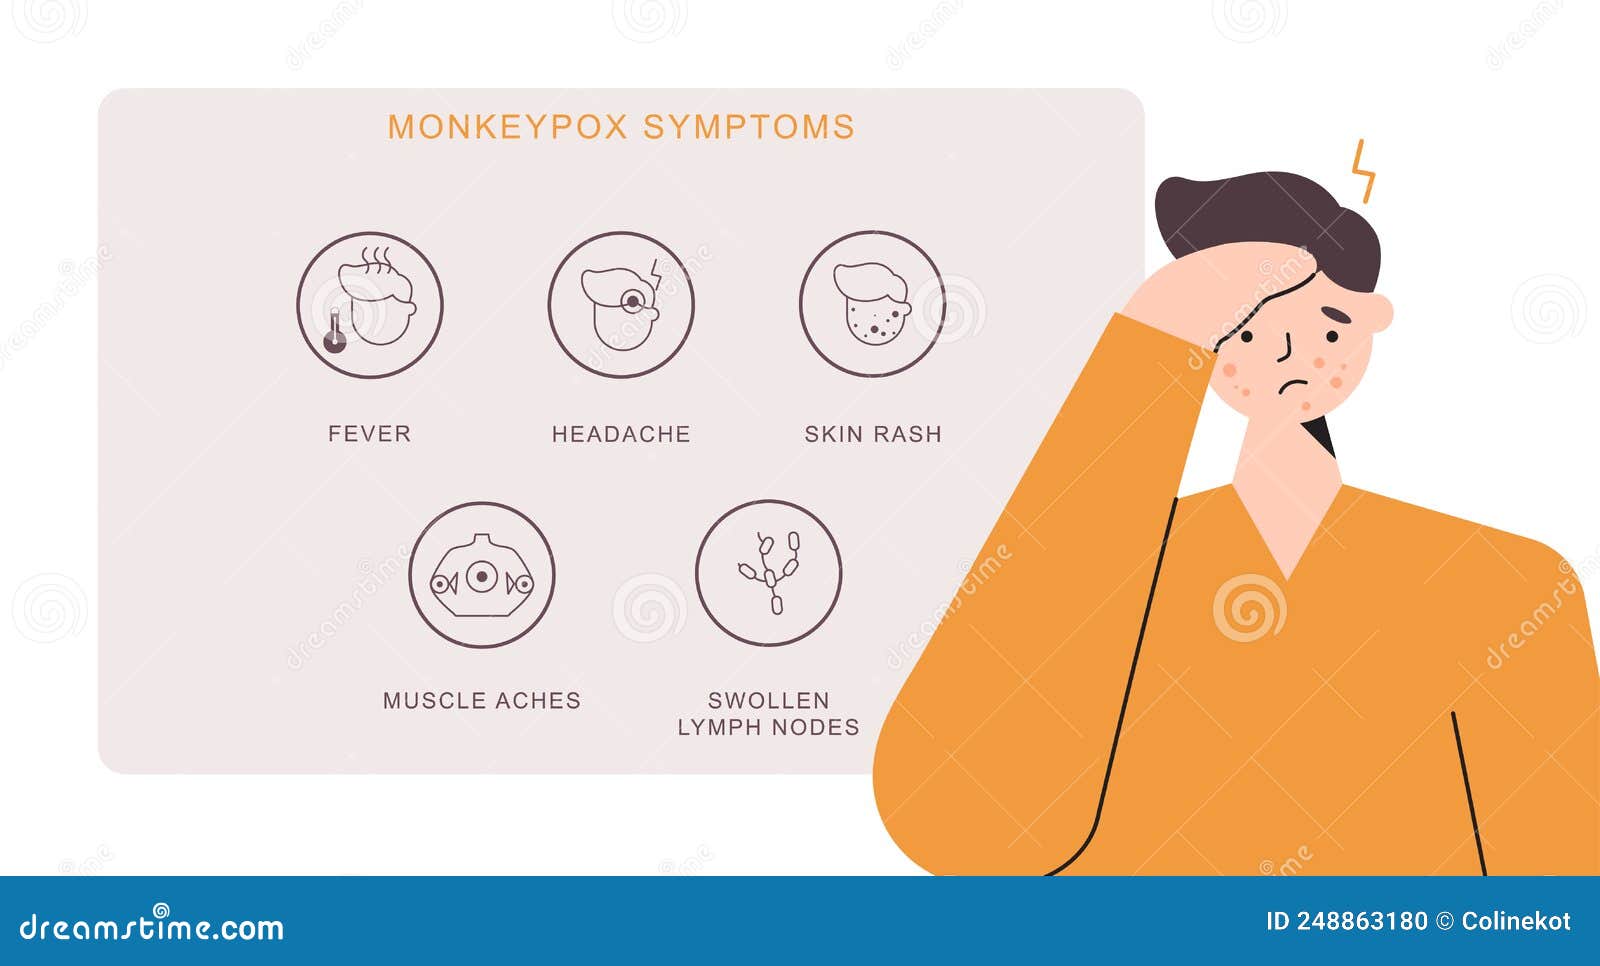 monkeypox symptoms 